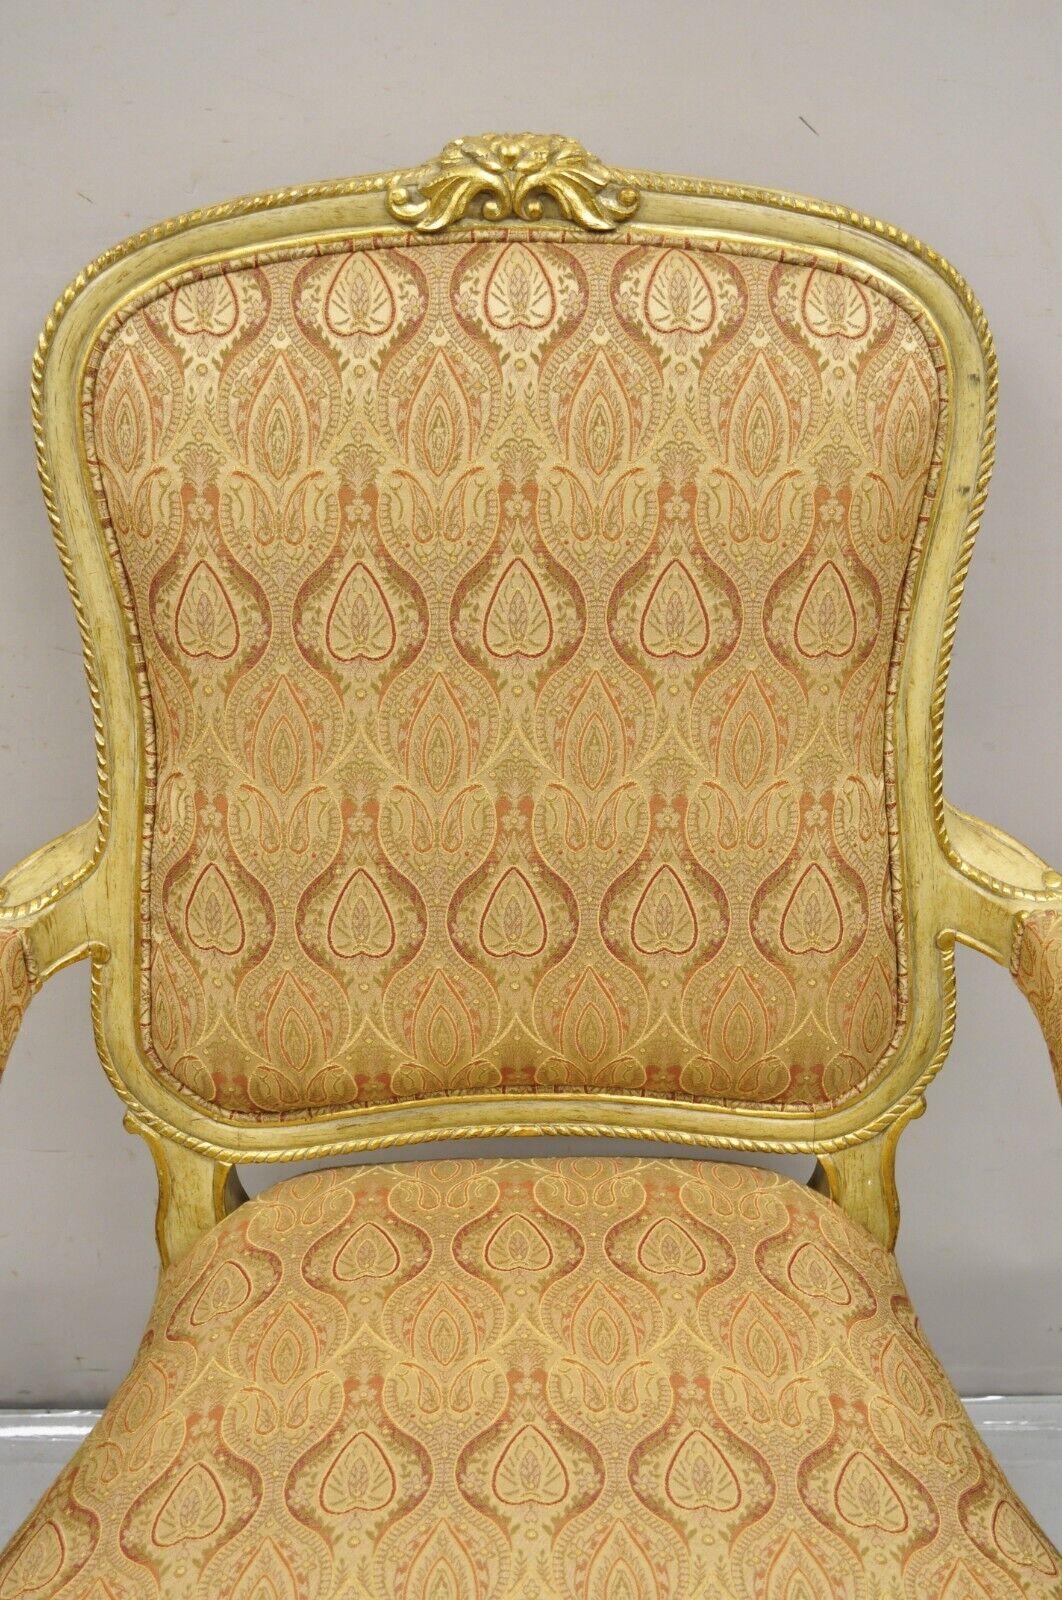 Oscar de la Renta Home Century Furniture Italian Neoclassical Style Armchair In Good Condition For Sale In Philadelphia, PA